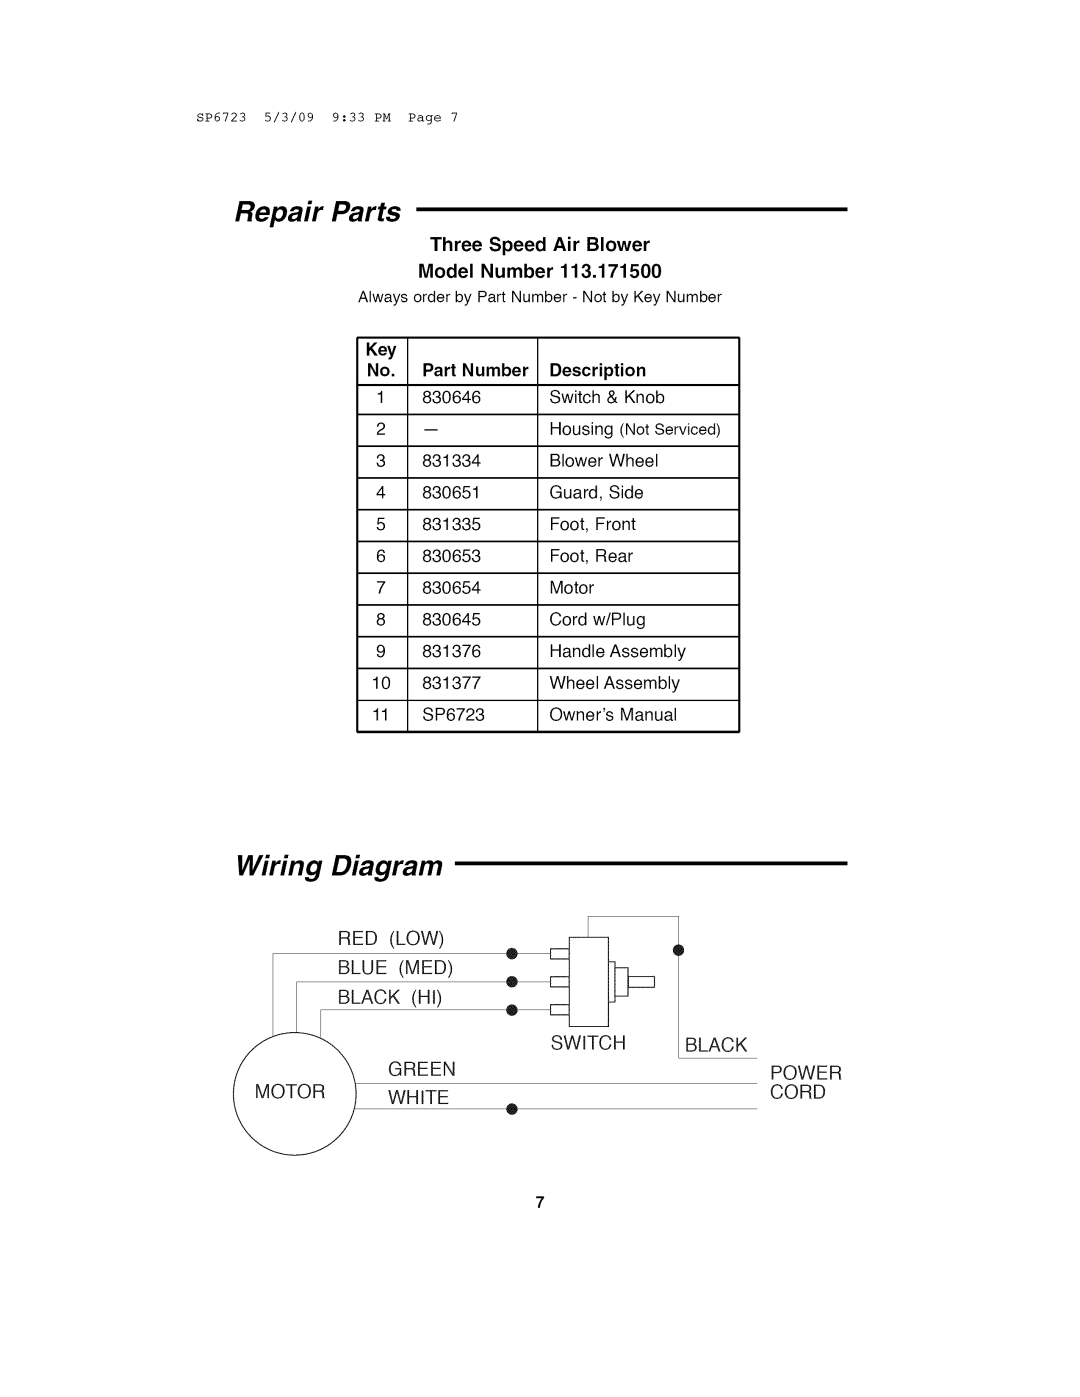 Univex 17150 Wiring, Part Number, Description, Repair Parts, Diagram, LACK H0, Three Speed Air Blower Model Number 